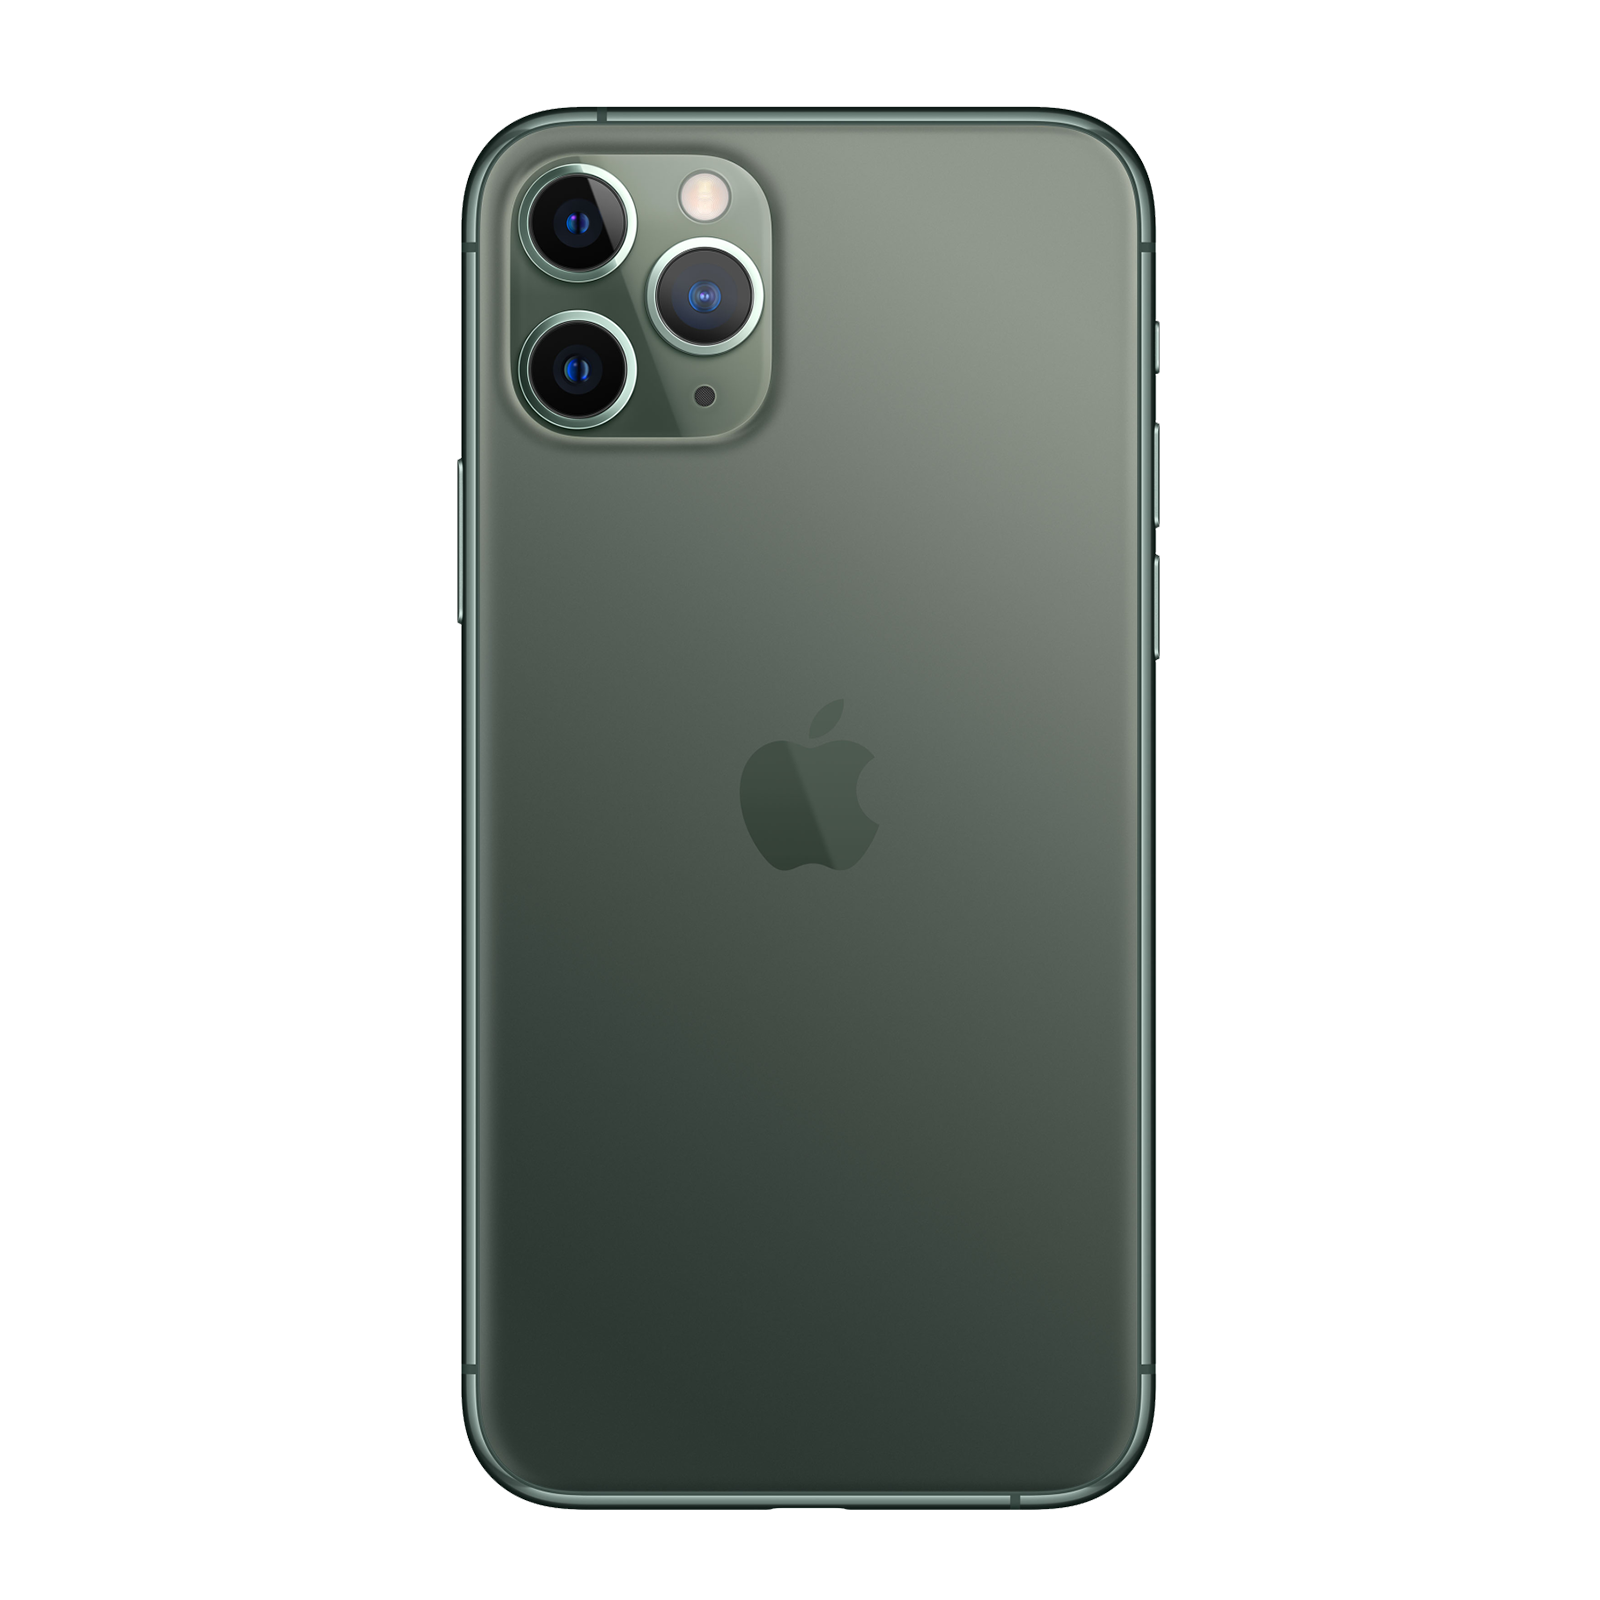 Apple iPhone 11 Pro 64GB Midnight Green Very Good - Unlocked